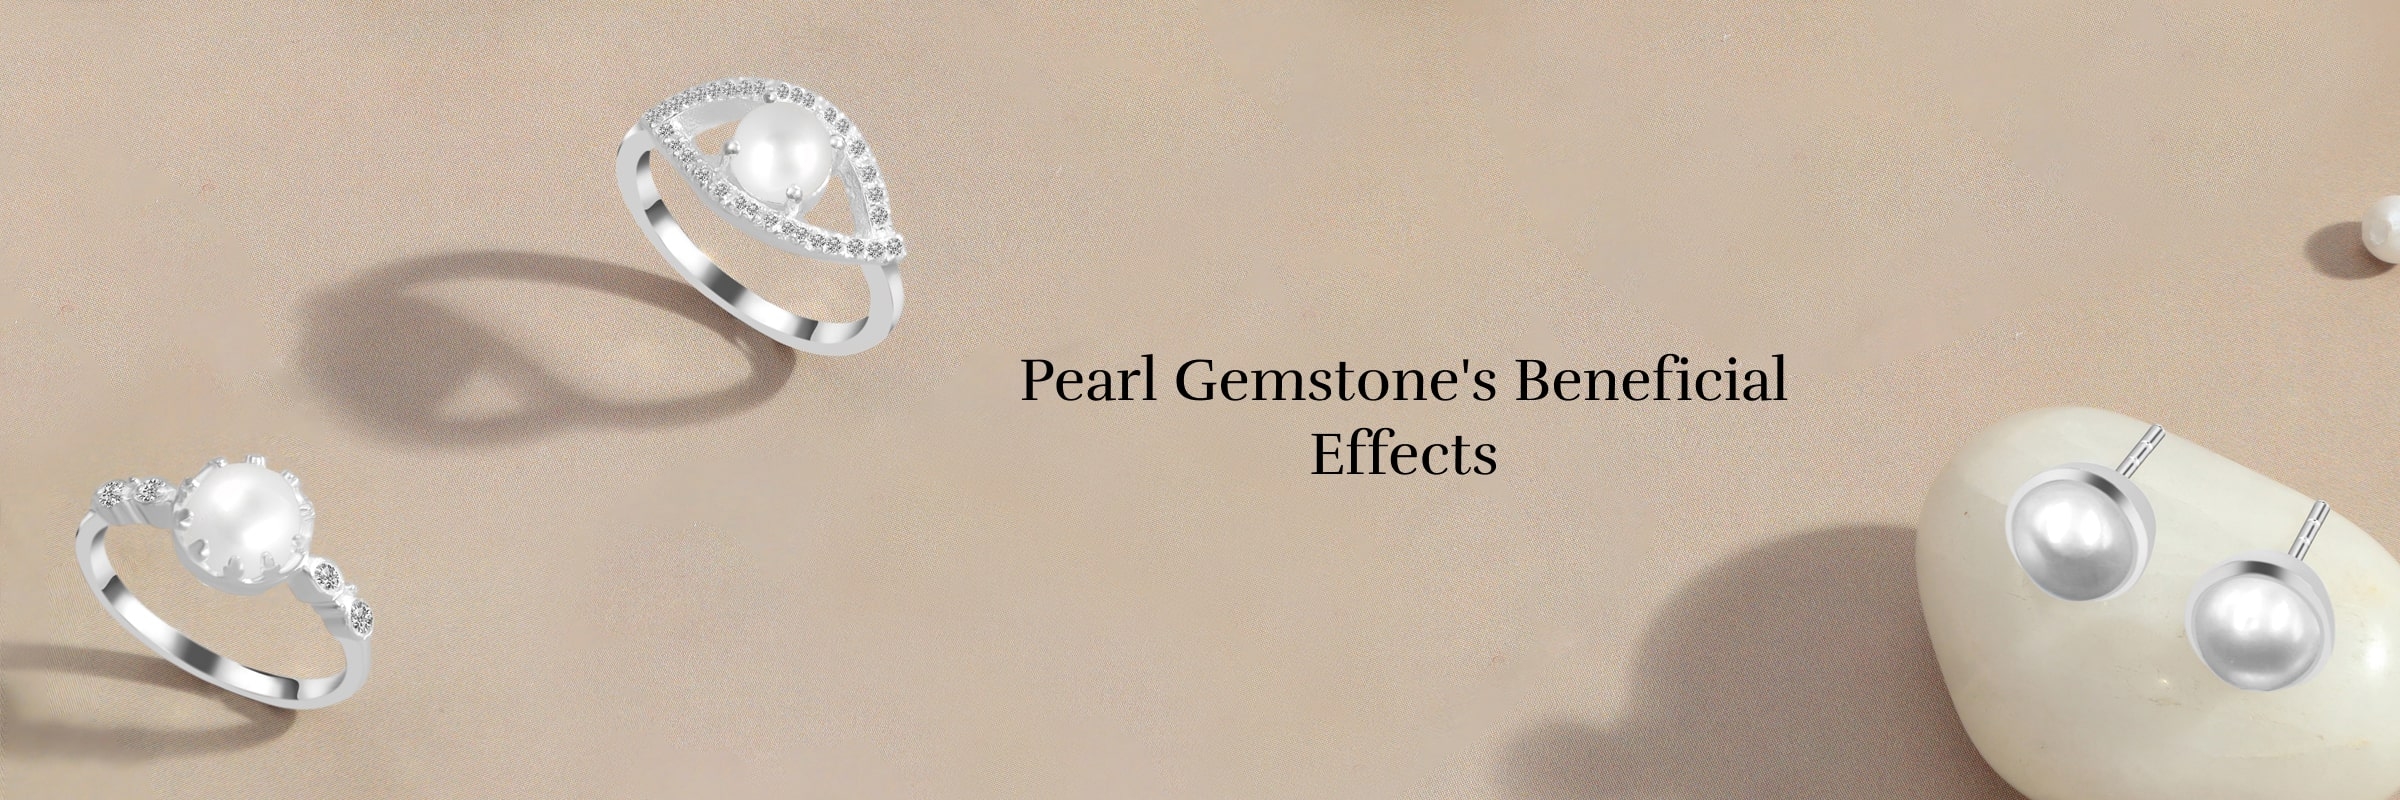 Benefits of Pearl Gemstone